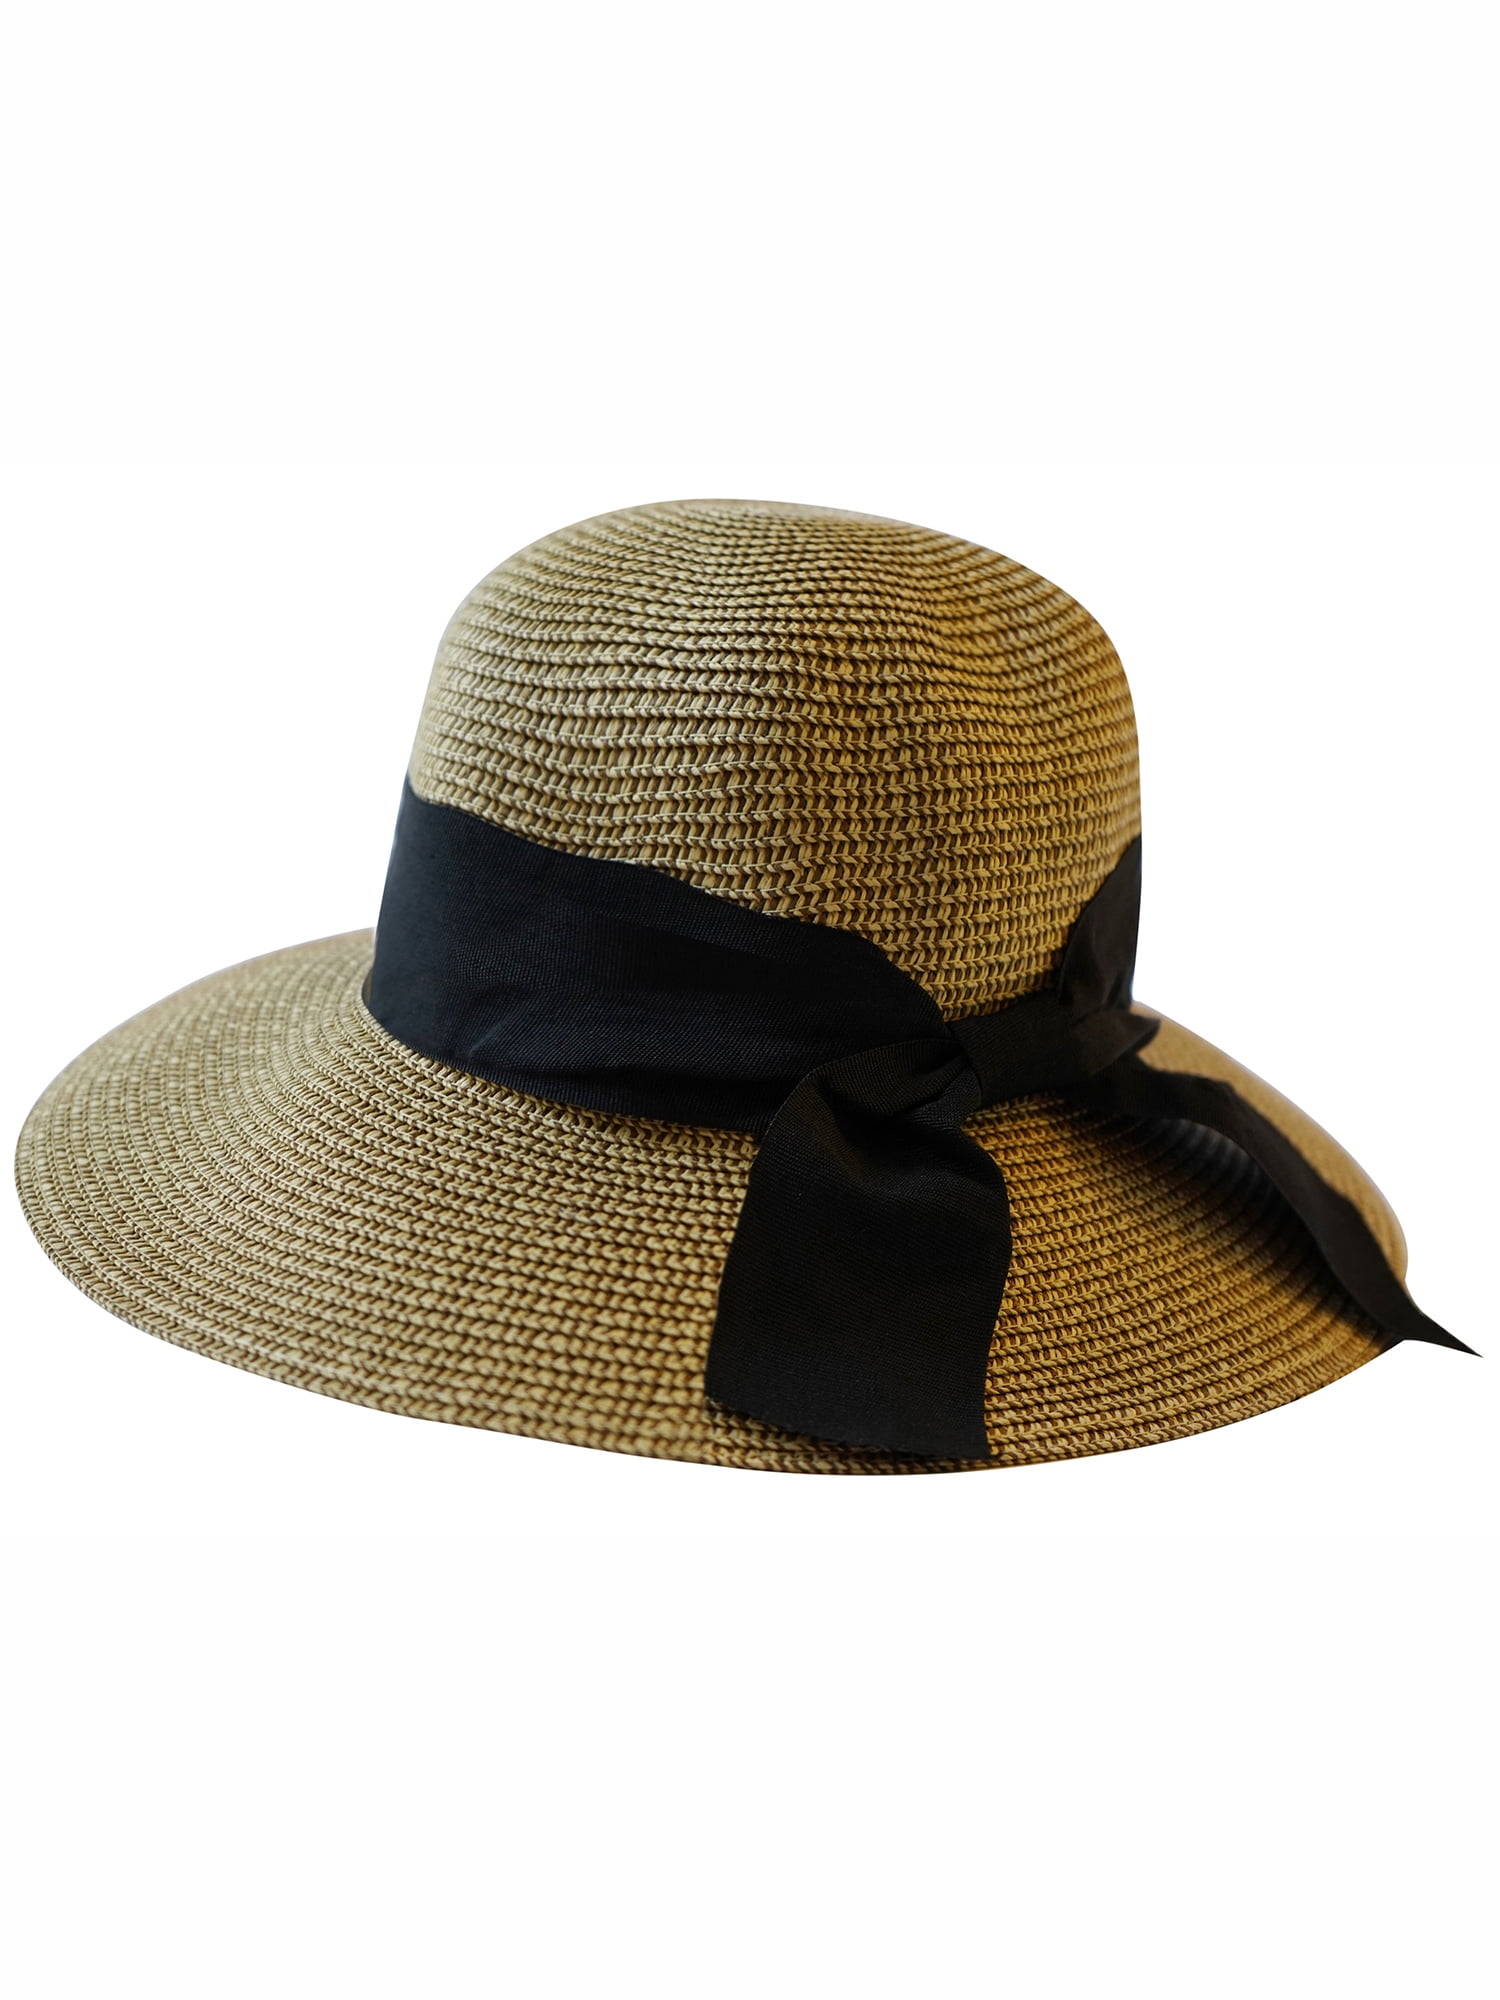 Straw Hat For Women Packable Summer Hats For Women Floppy Hat